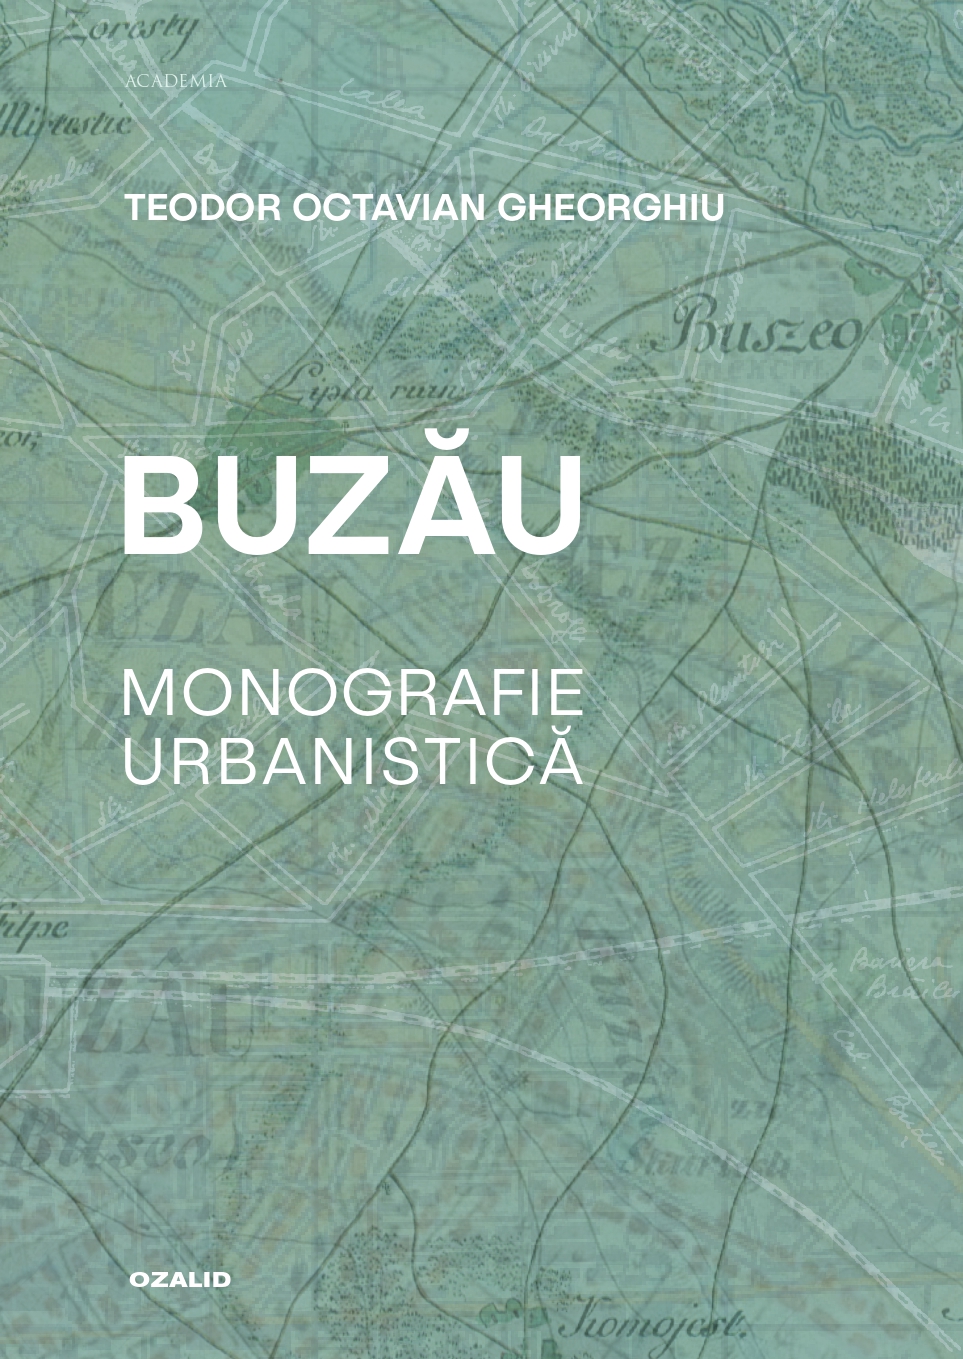 Buzau. Monografie urbanistica | Teodor Octavian Gheorghiu carturesti.ro Arta, arhitectura